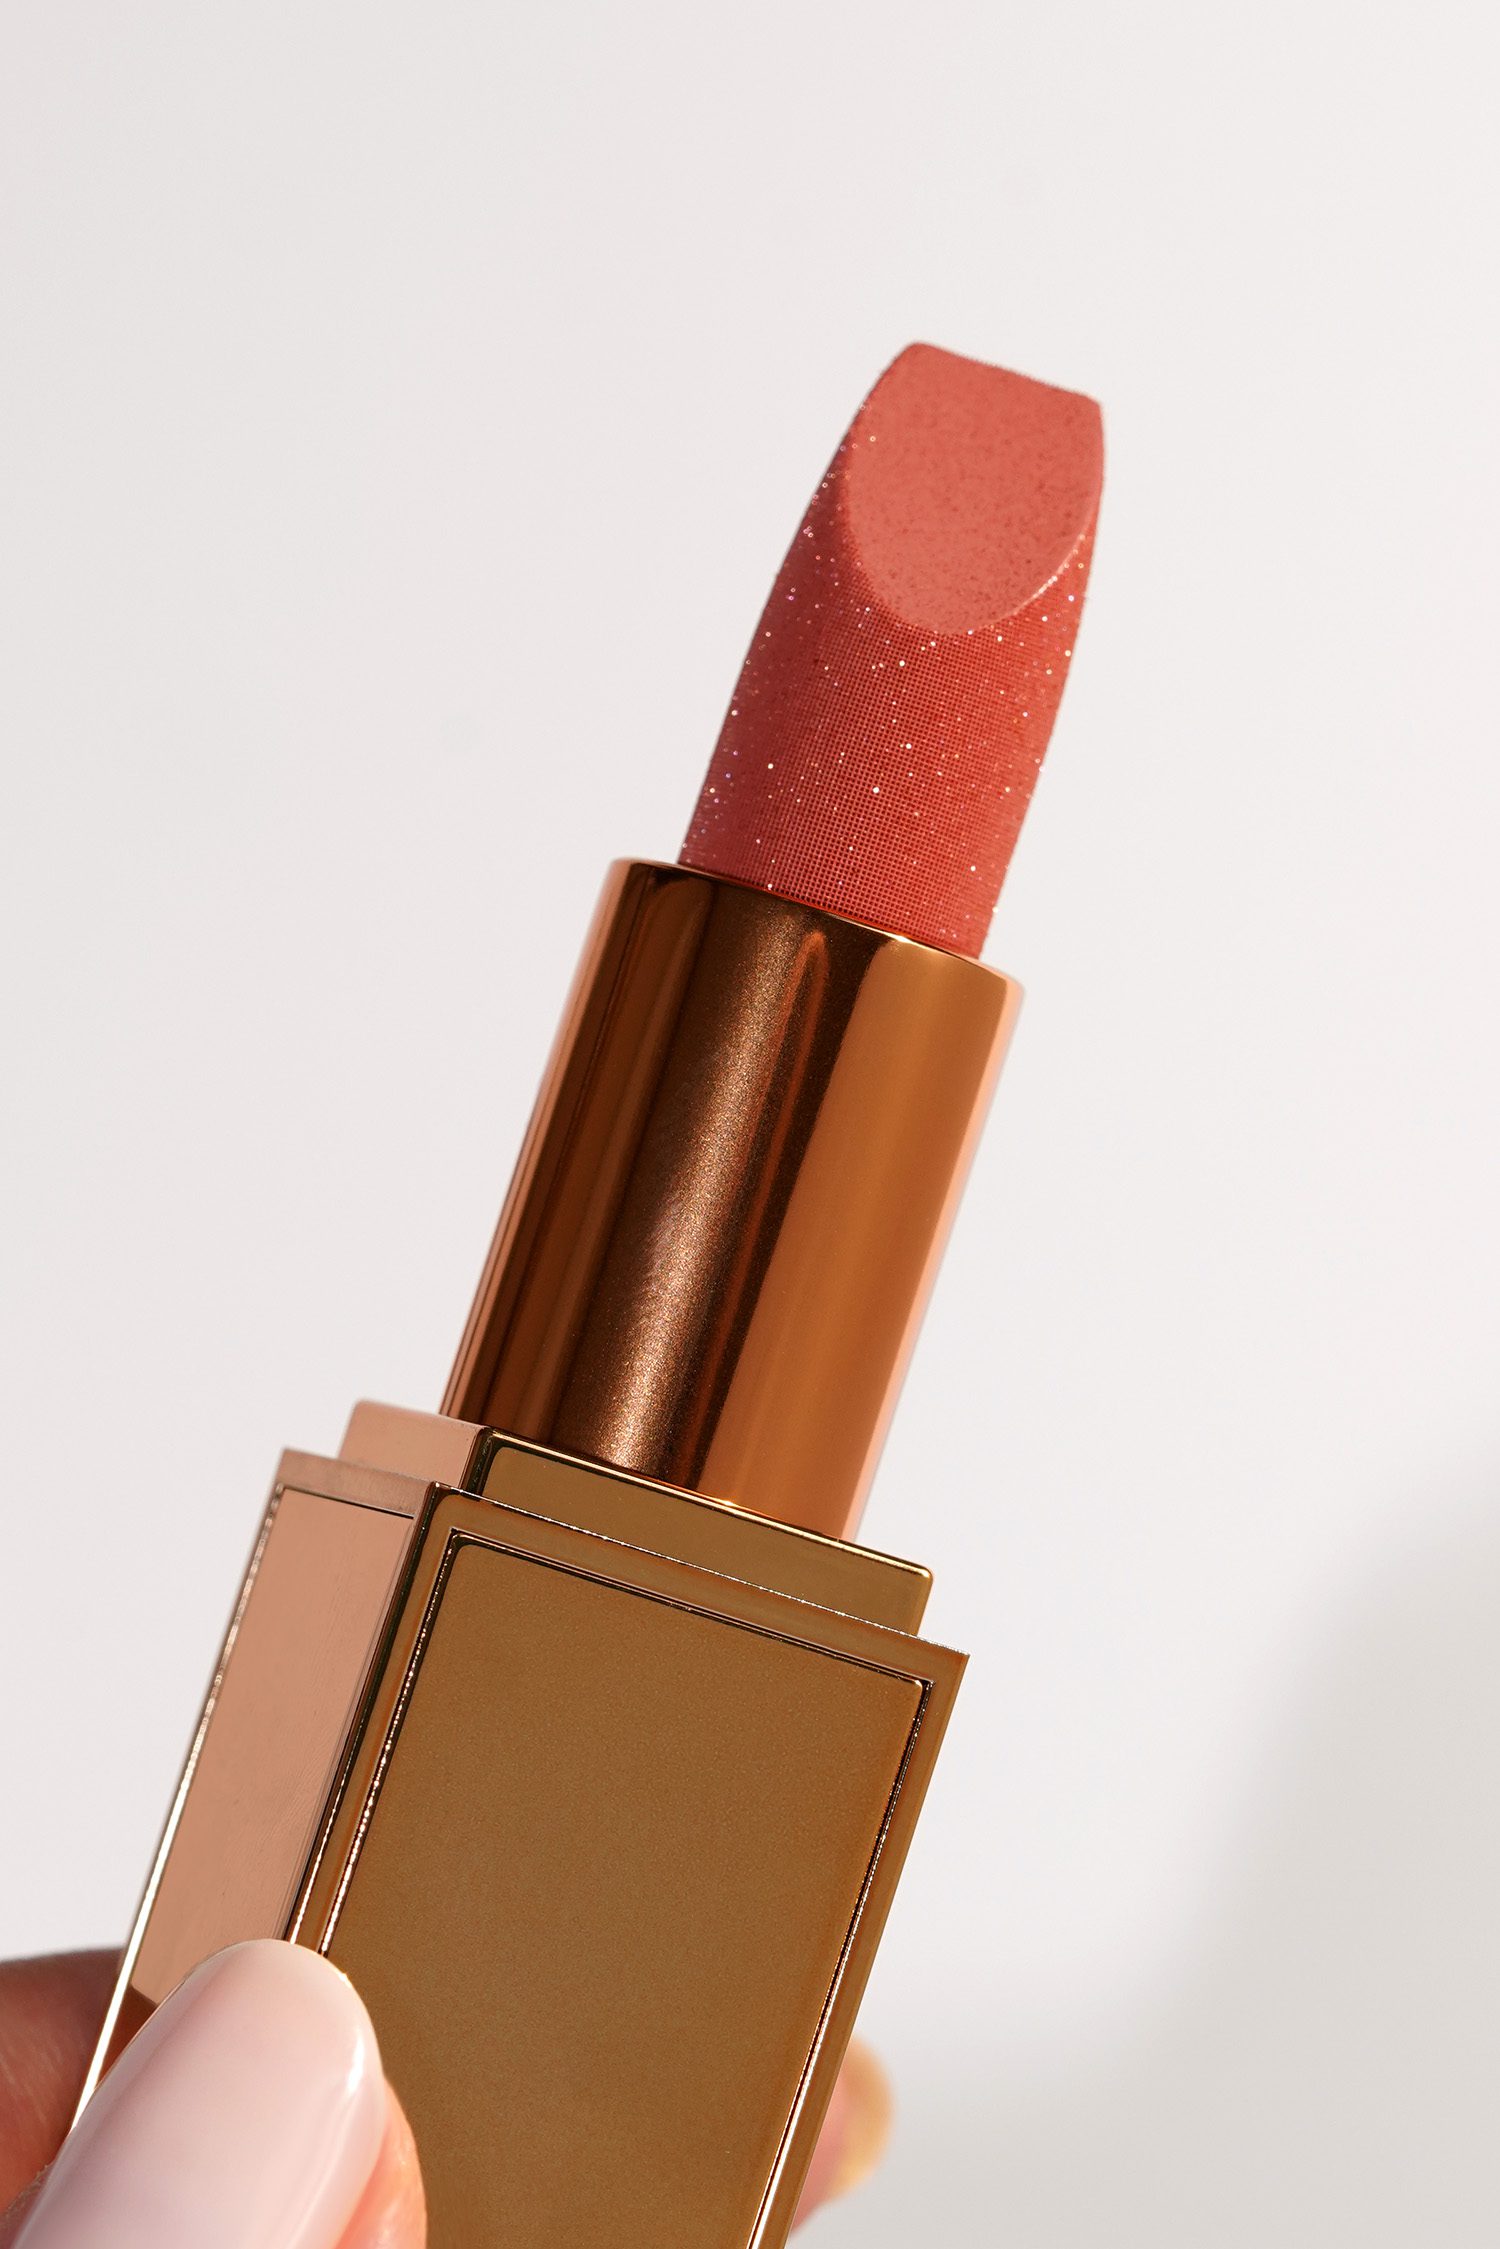 NEW TOM FORD Soleil Summer 2023, Product Updates, Lipstick Saga Finale 😂